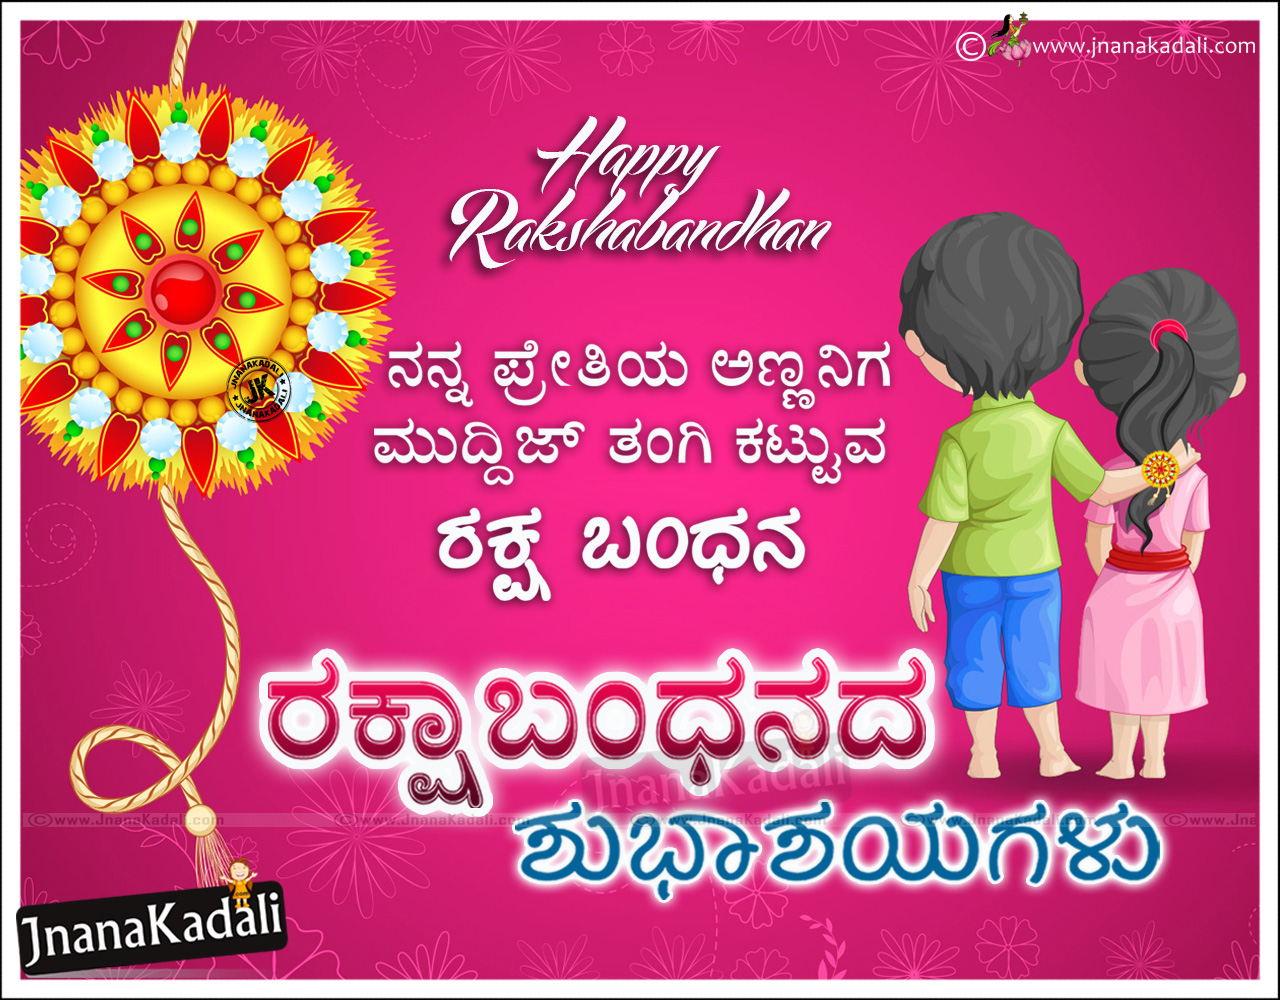 Happy Raksha Bandhan Kannada Quotes and Greetings | Kannada Rakhi